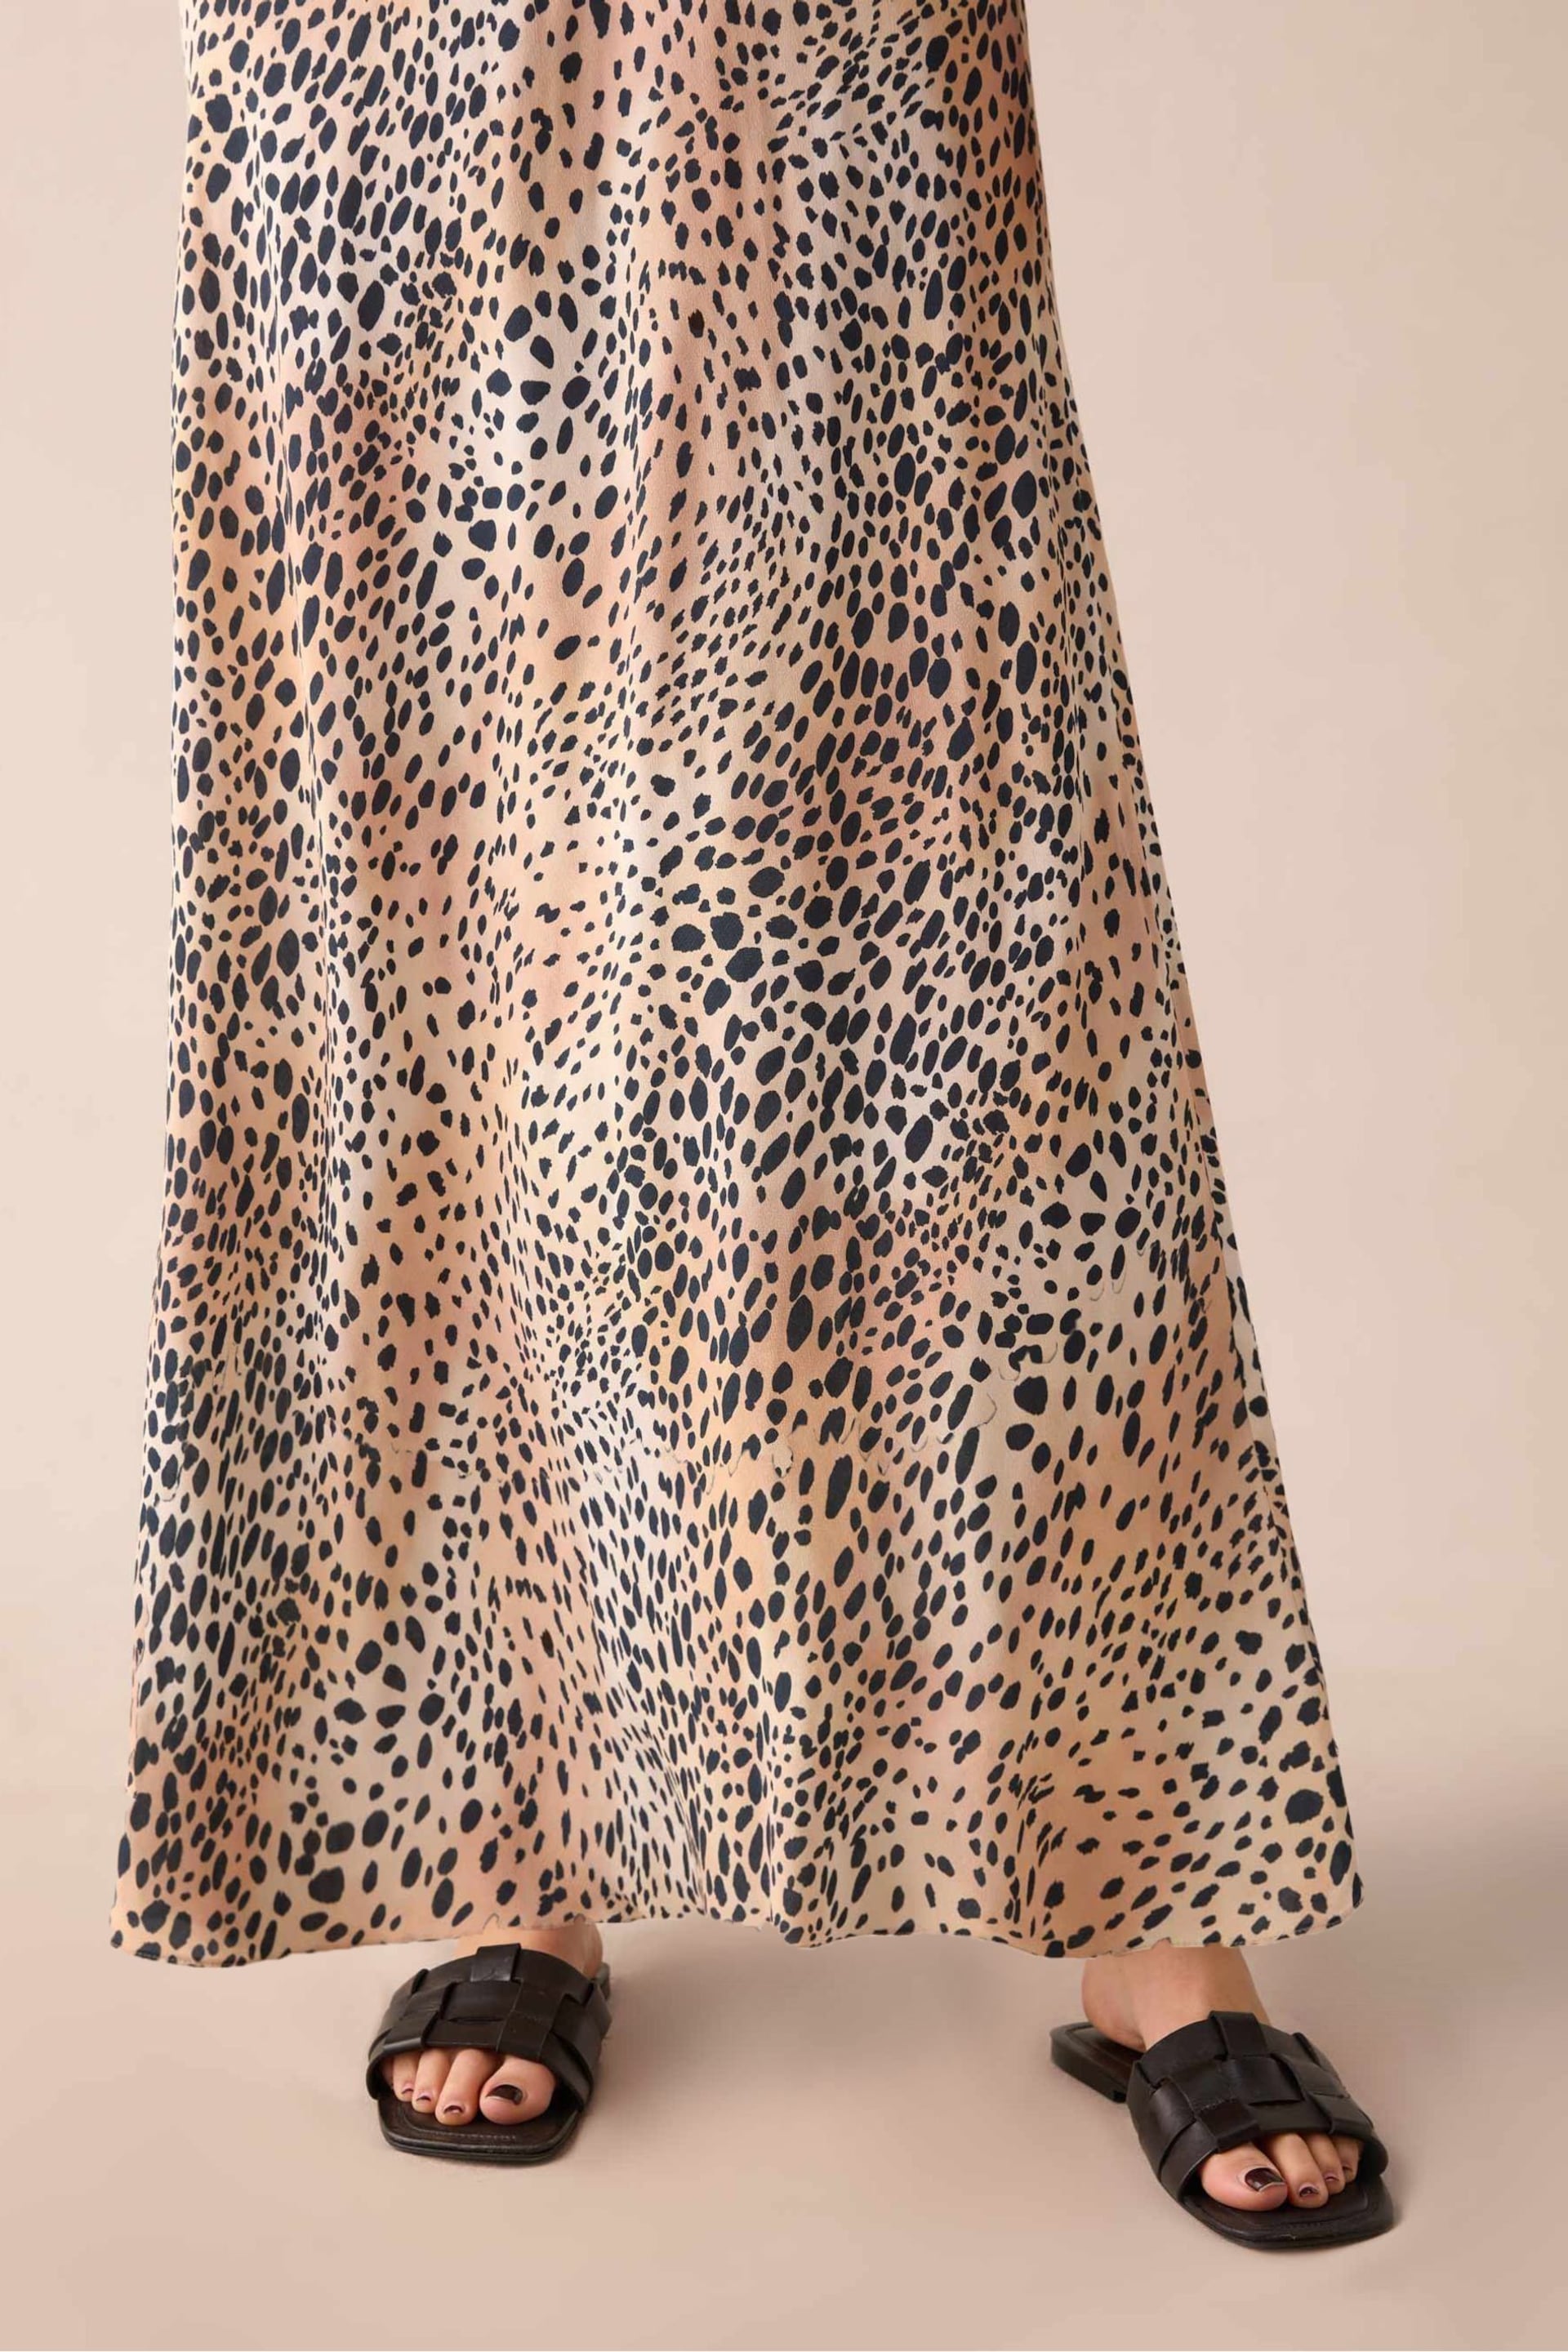 Ro&Zo Leopard Print Bias Cut Maxi Brown Skirt - Image 3 of 5